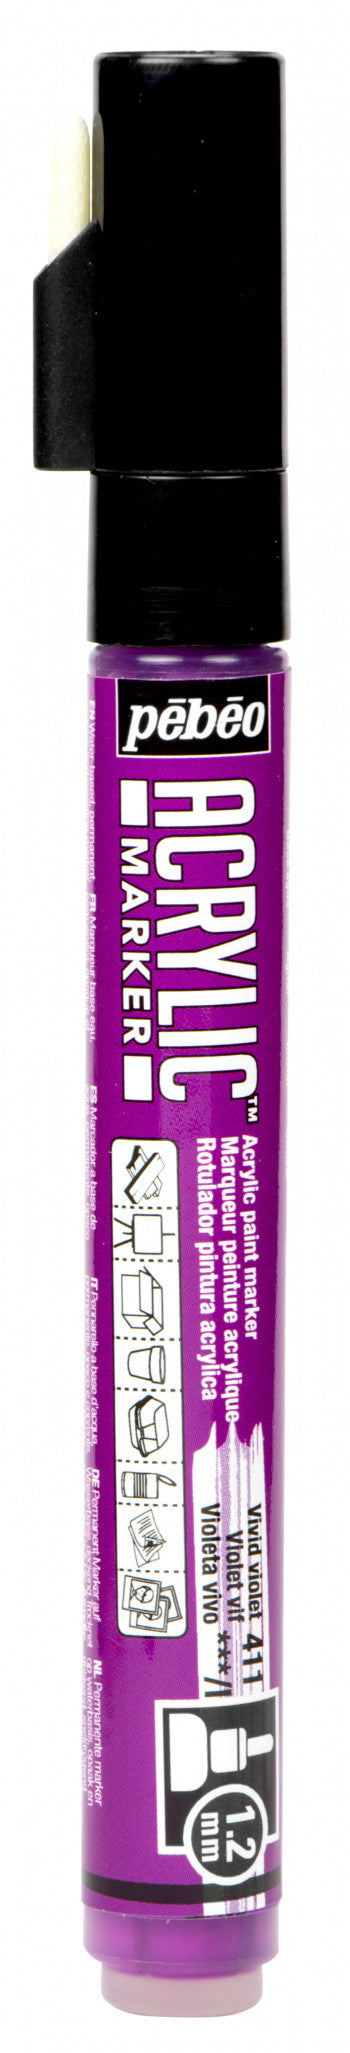 Acrylic Marker 1.2mm Pebeo Bright purple - 411